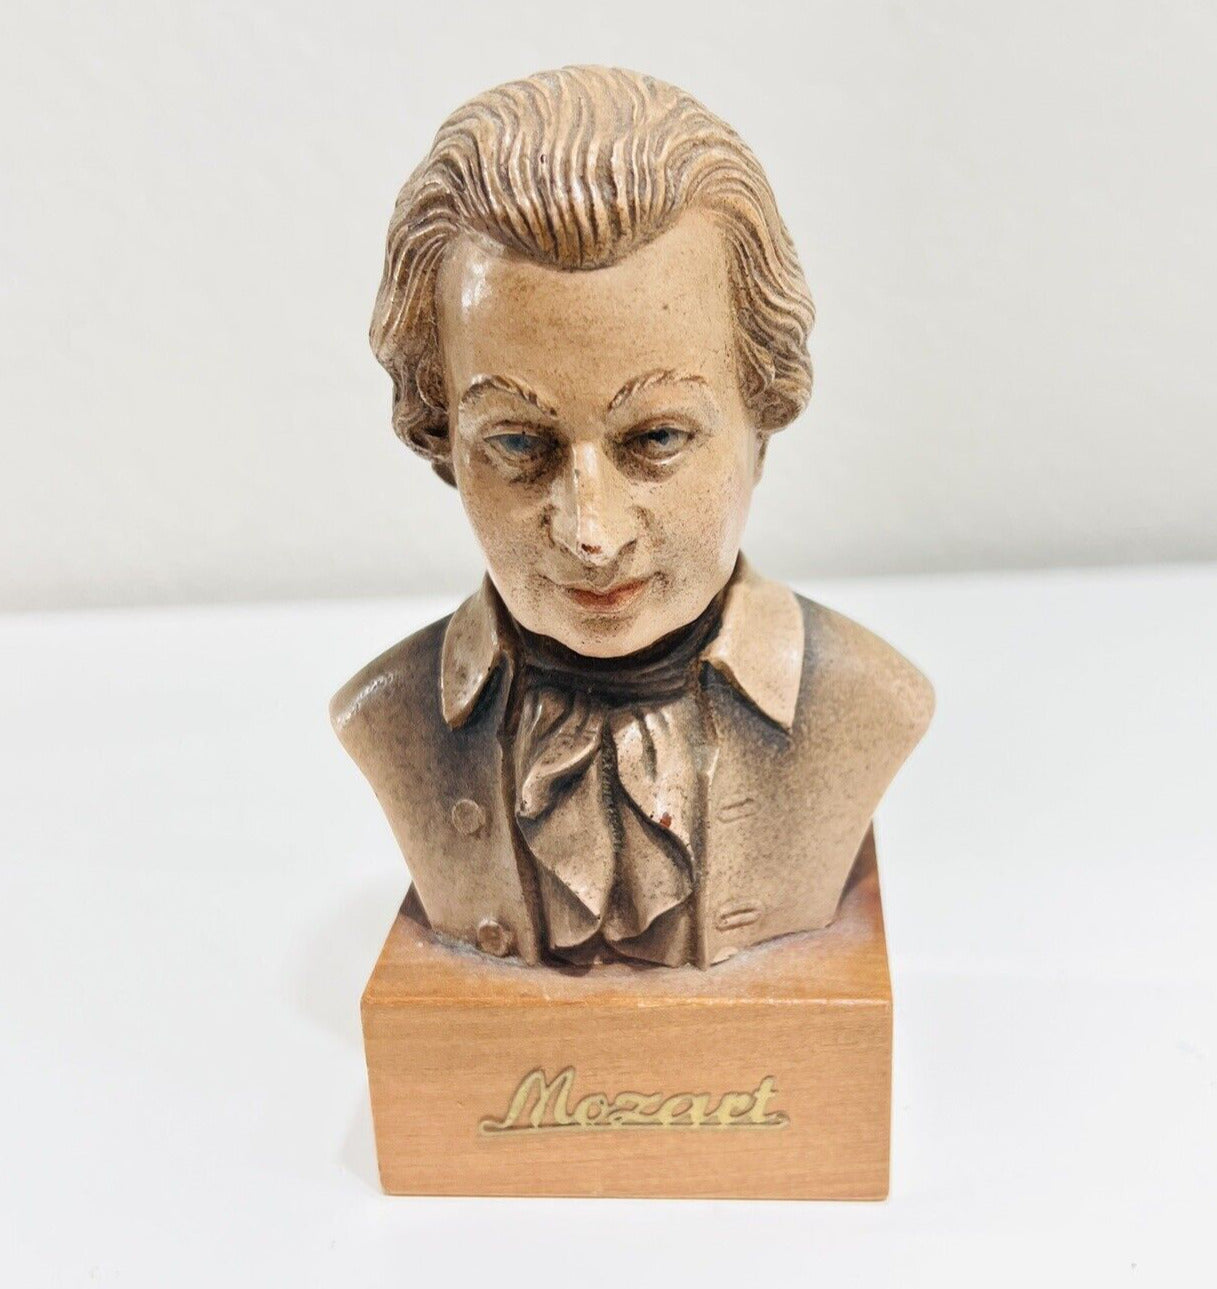 ANRI Italy Mozart Bust Statue Bust 4" High Wooden Music Home Decor Figurine